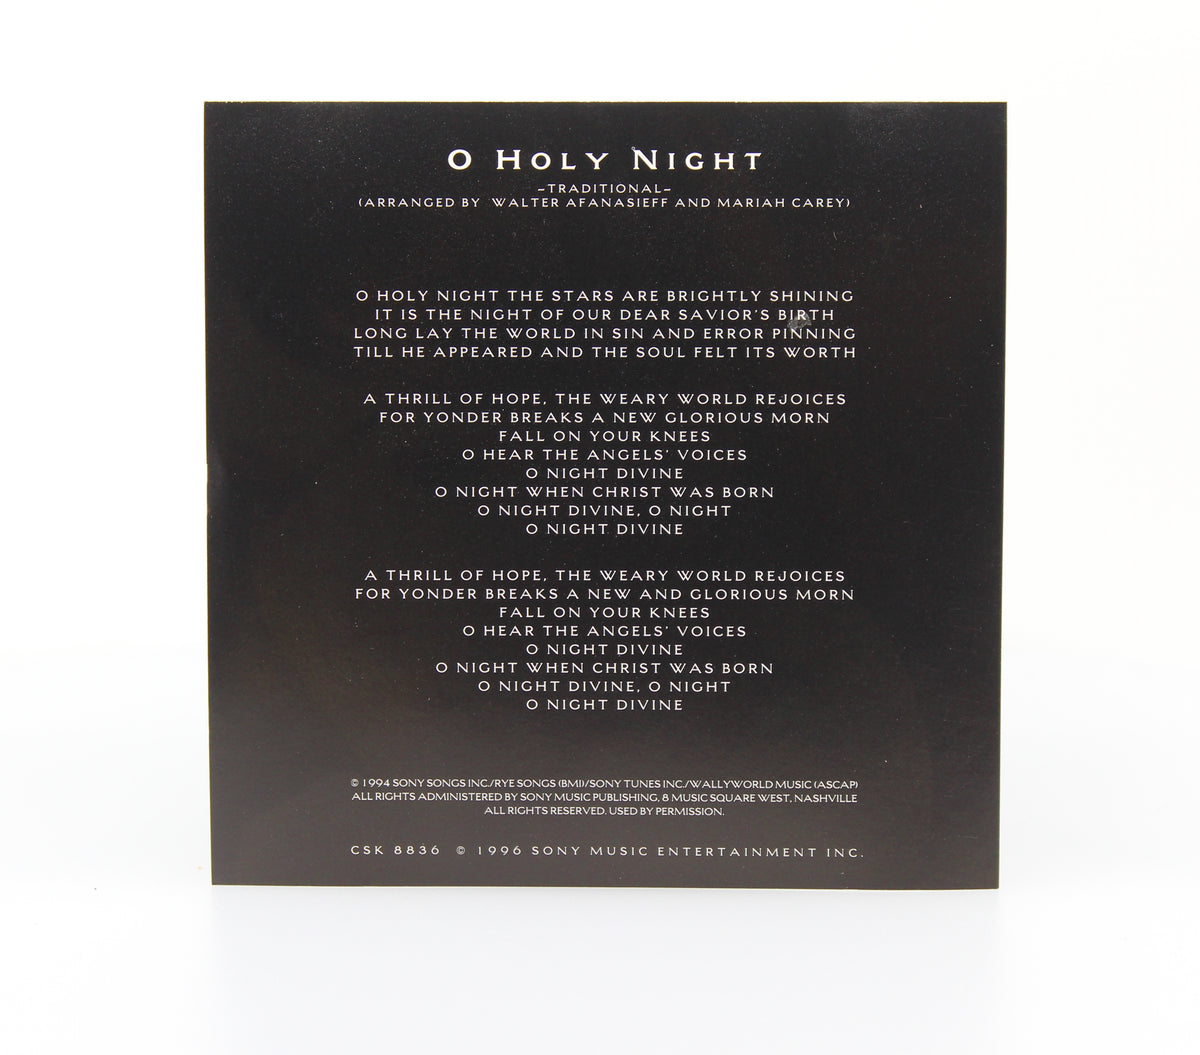 Mariah Carey, O Holy Night, CD Single Prom, US 1996 (CD 643)